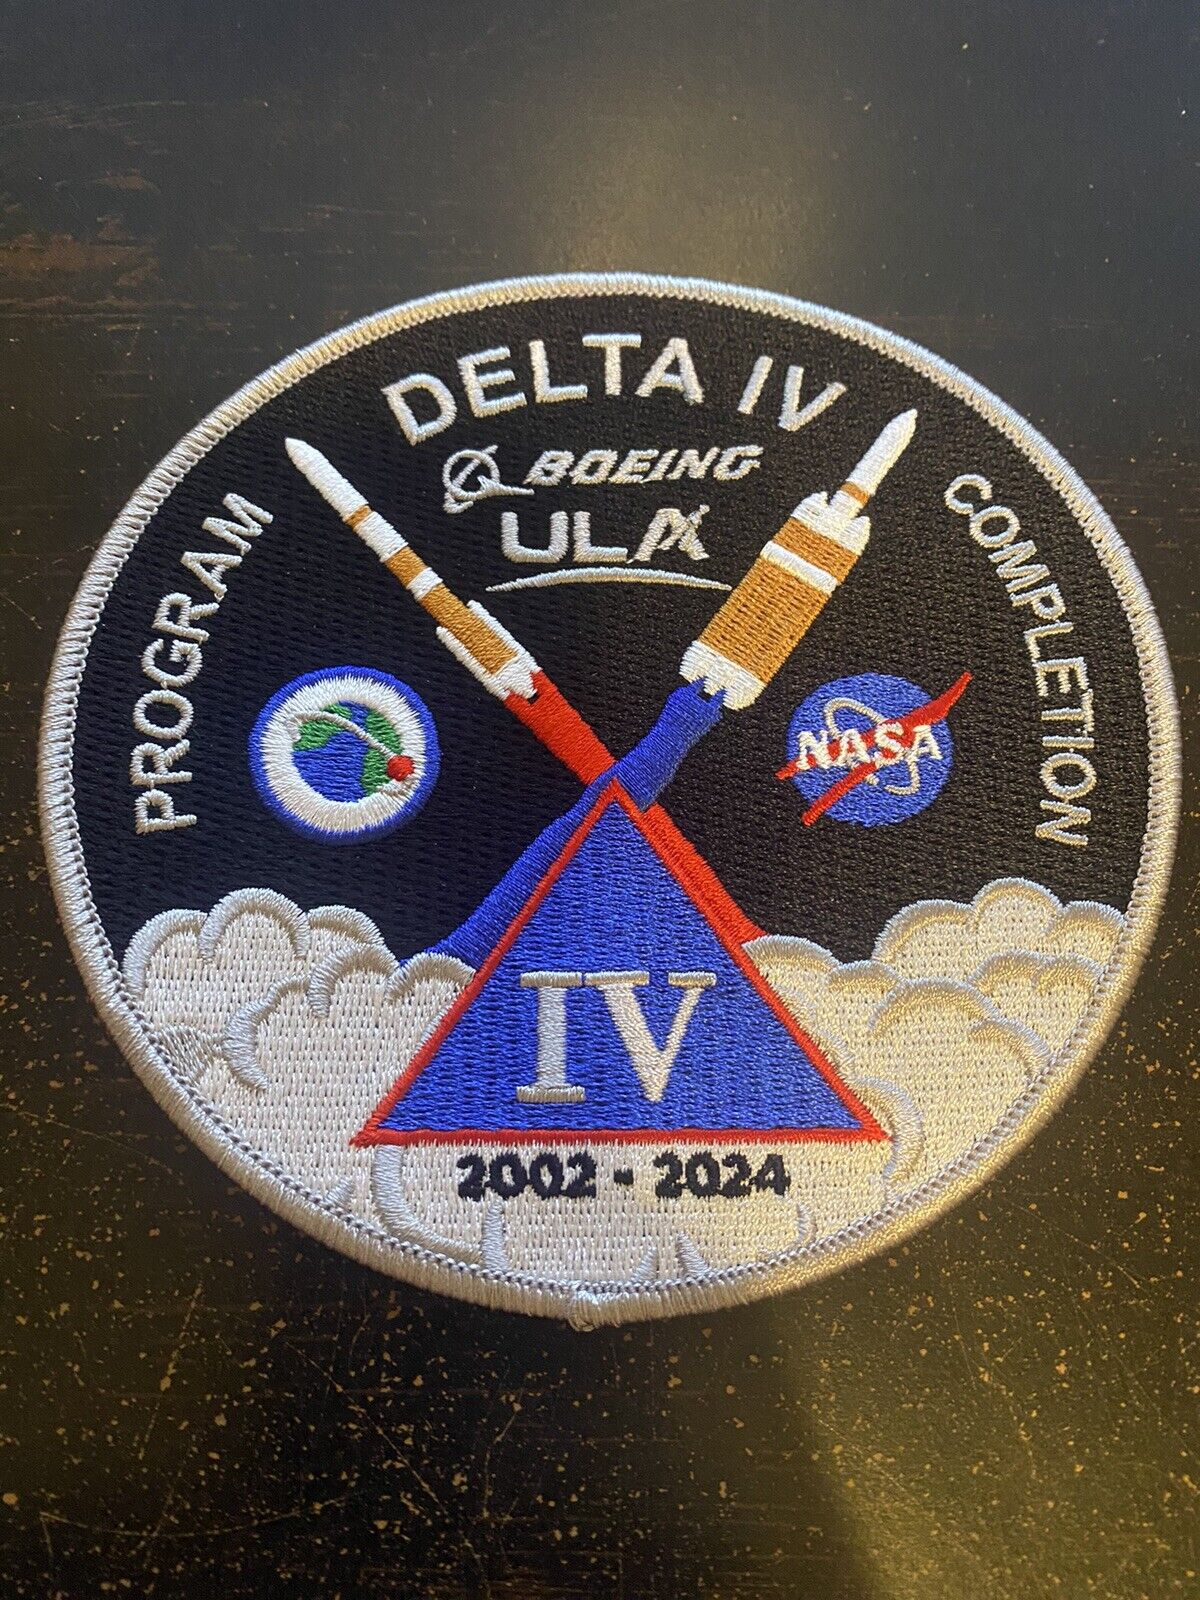 DELTA IV PROGRAM COMPLETION COMMEMORATIVE PATCH MISSION BOEING ULA 2002 - 2024